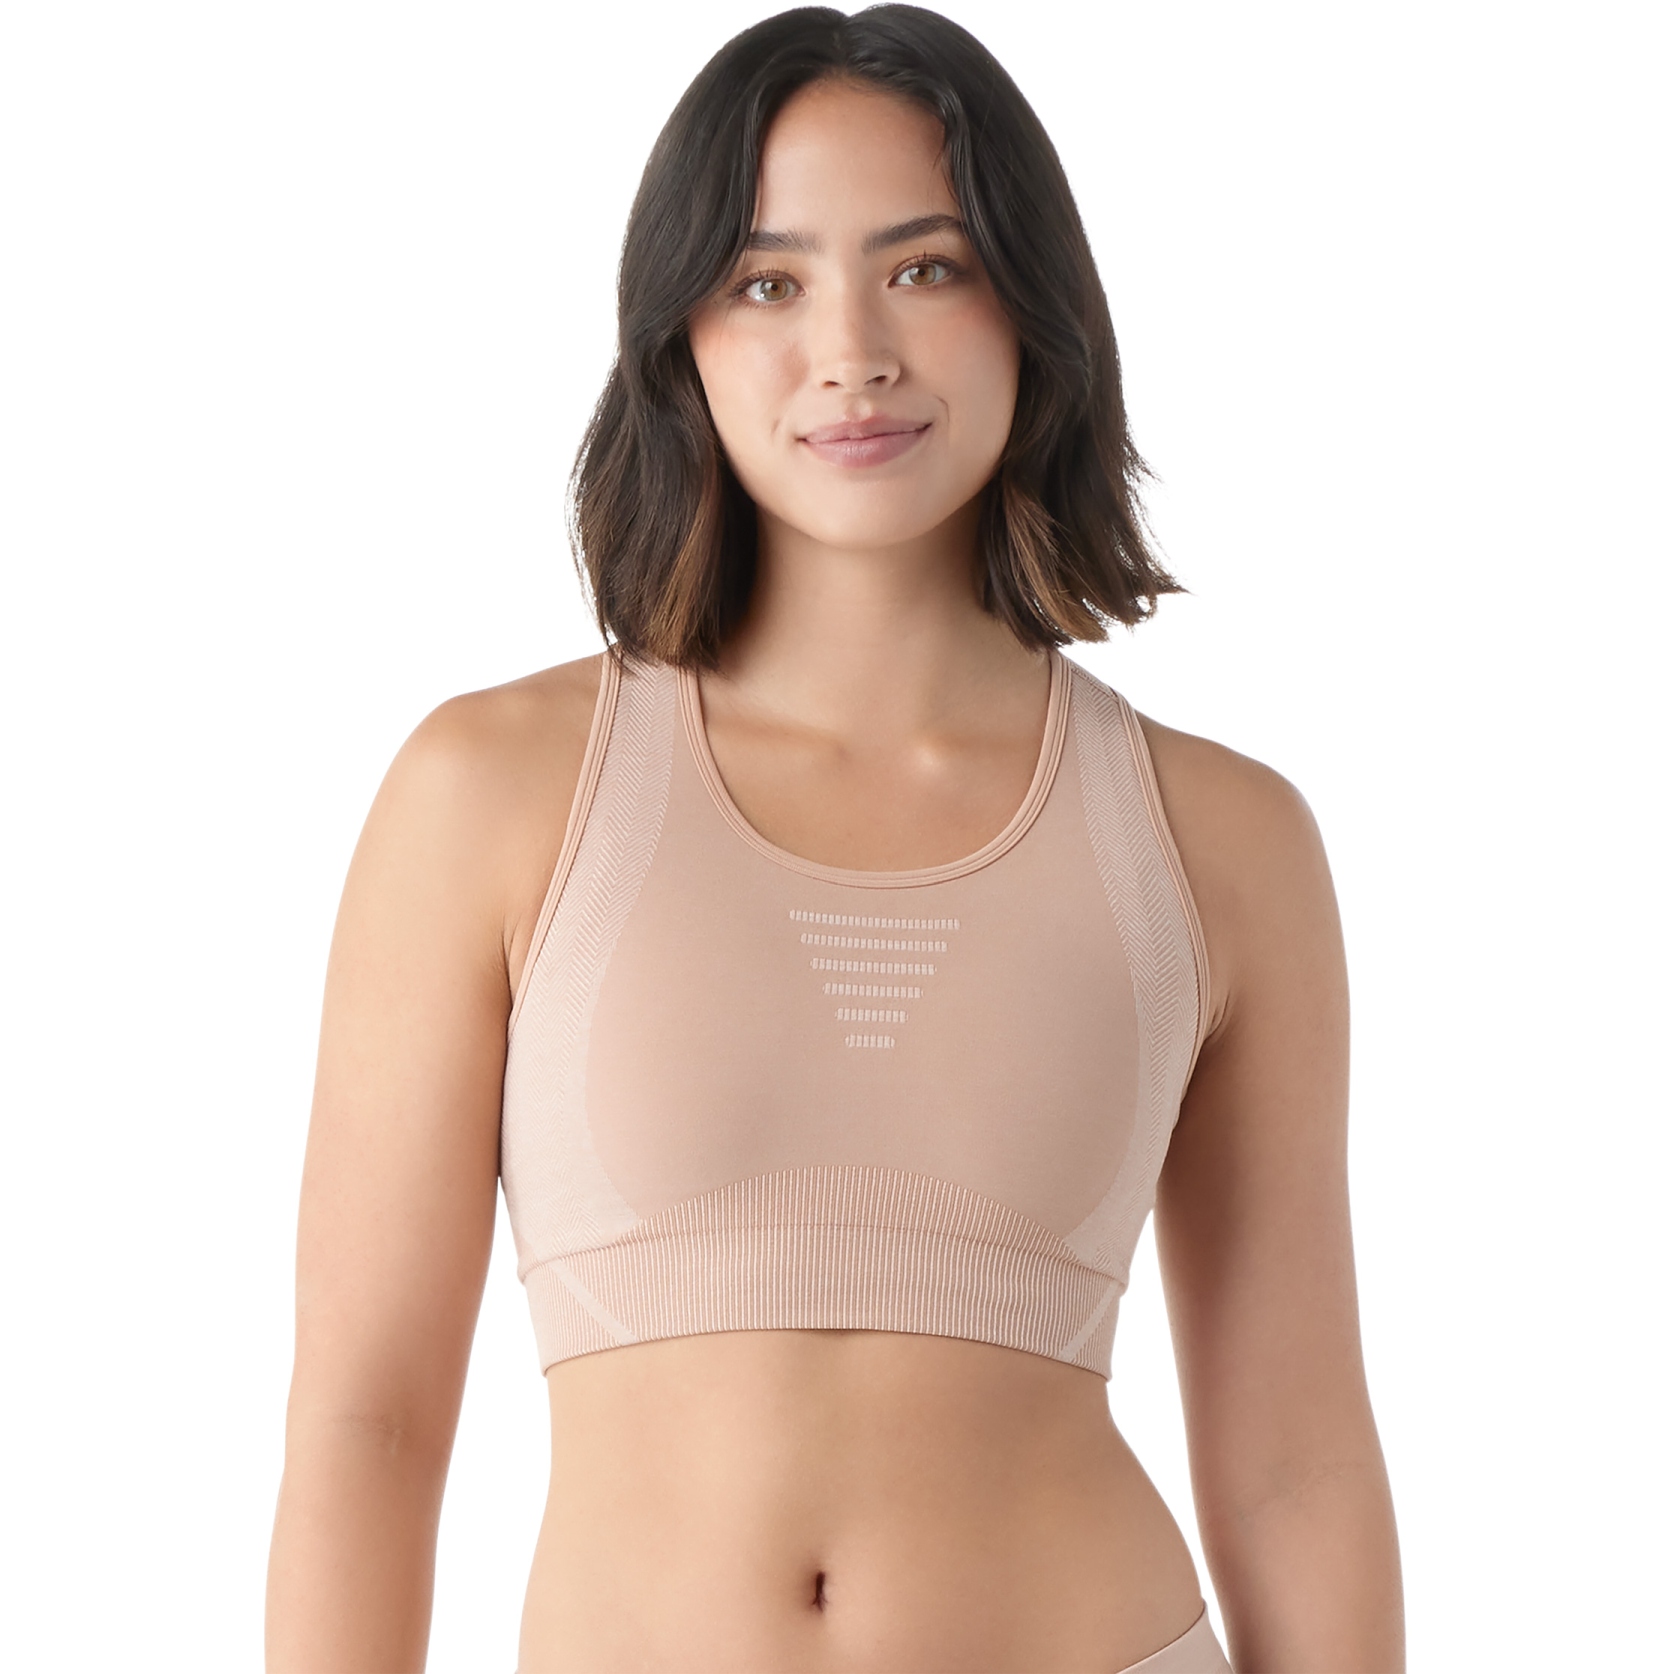 grough — New SmartWool sports bra range designed by active women